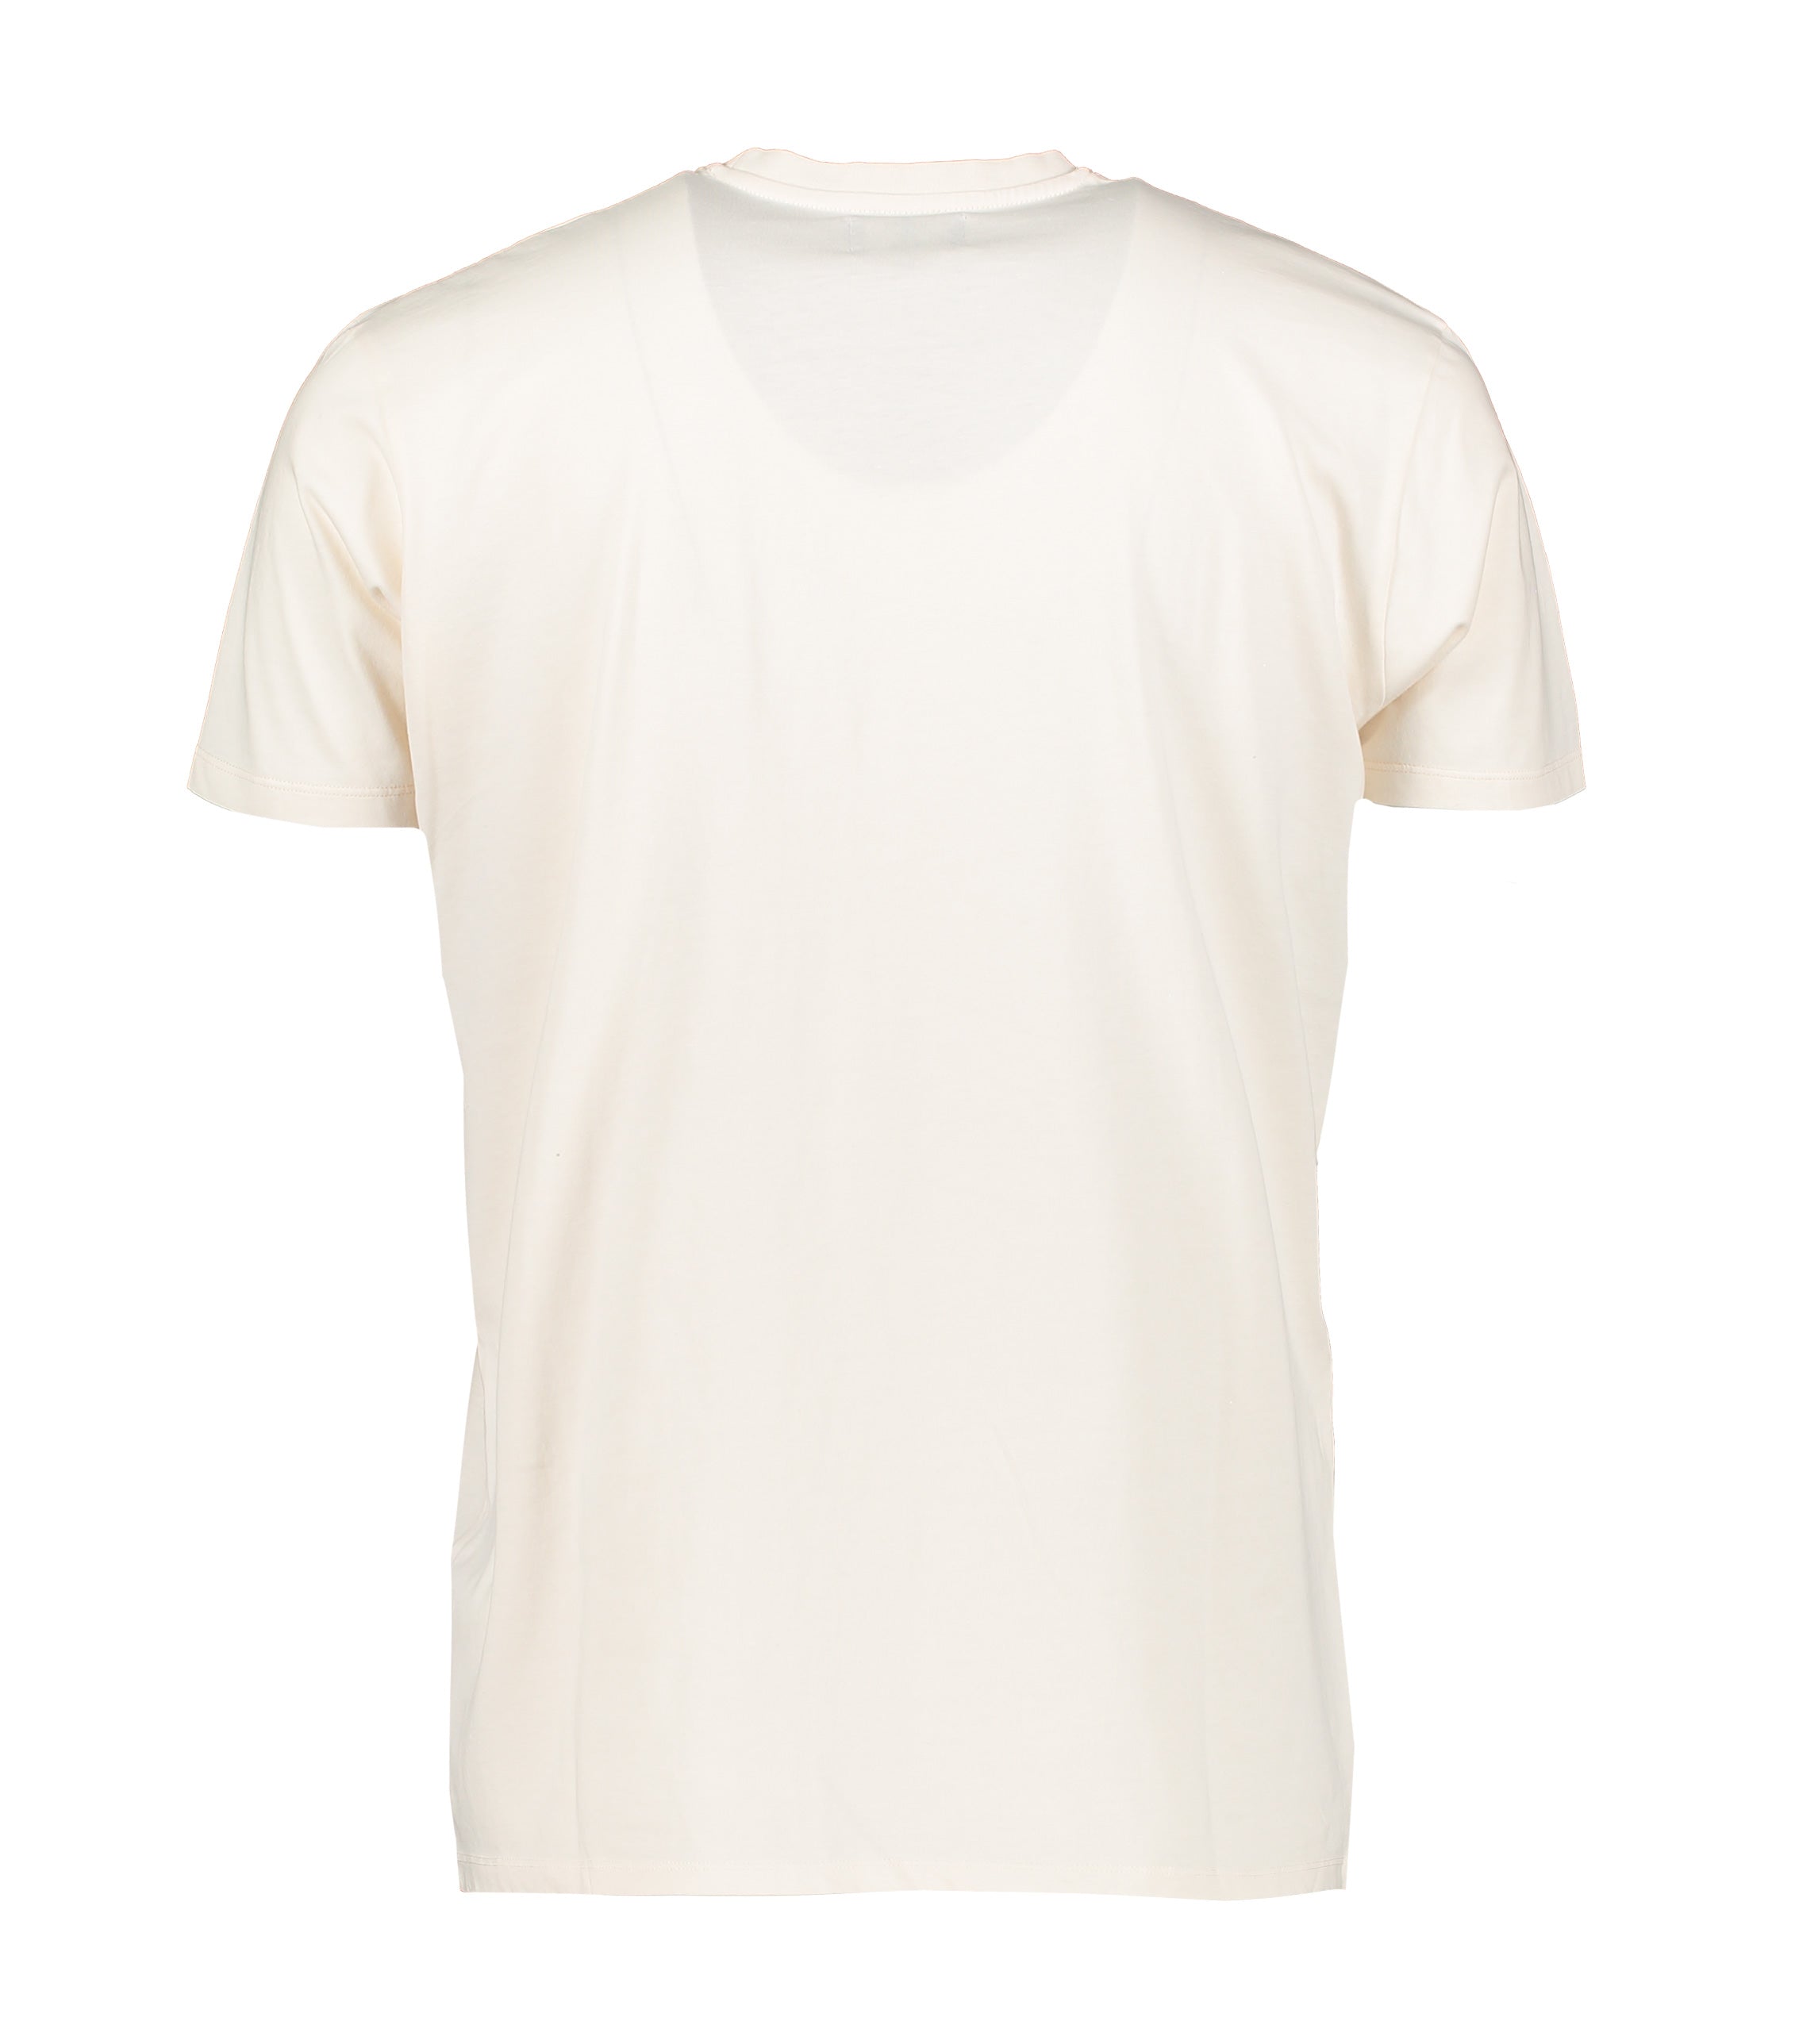 Rod Off White Tennis T-Shirt